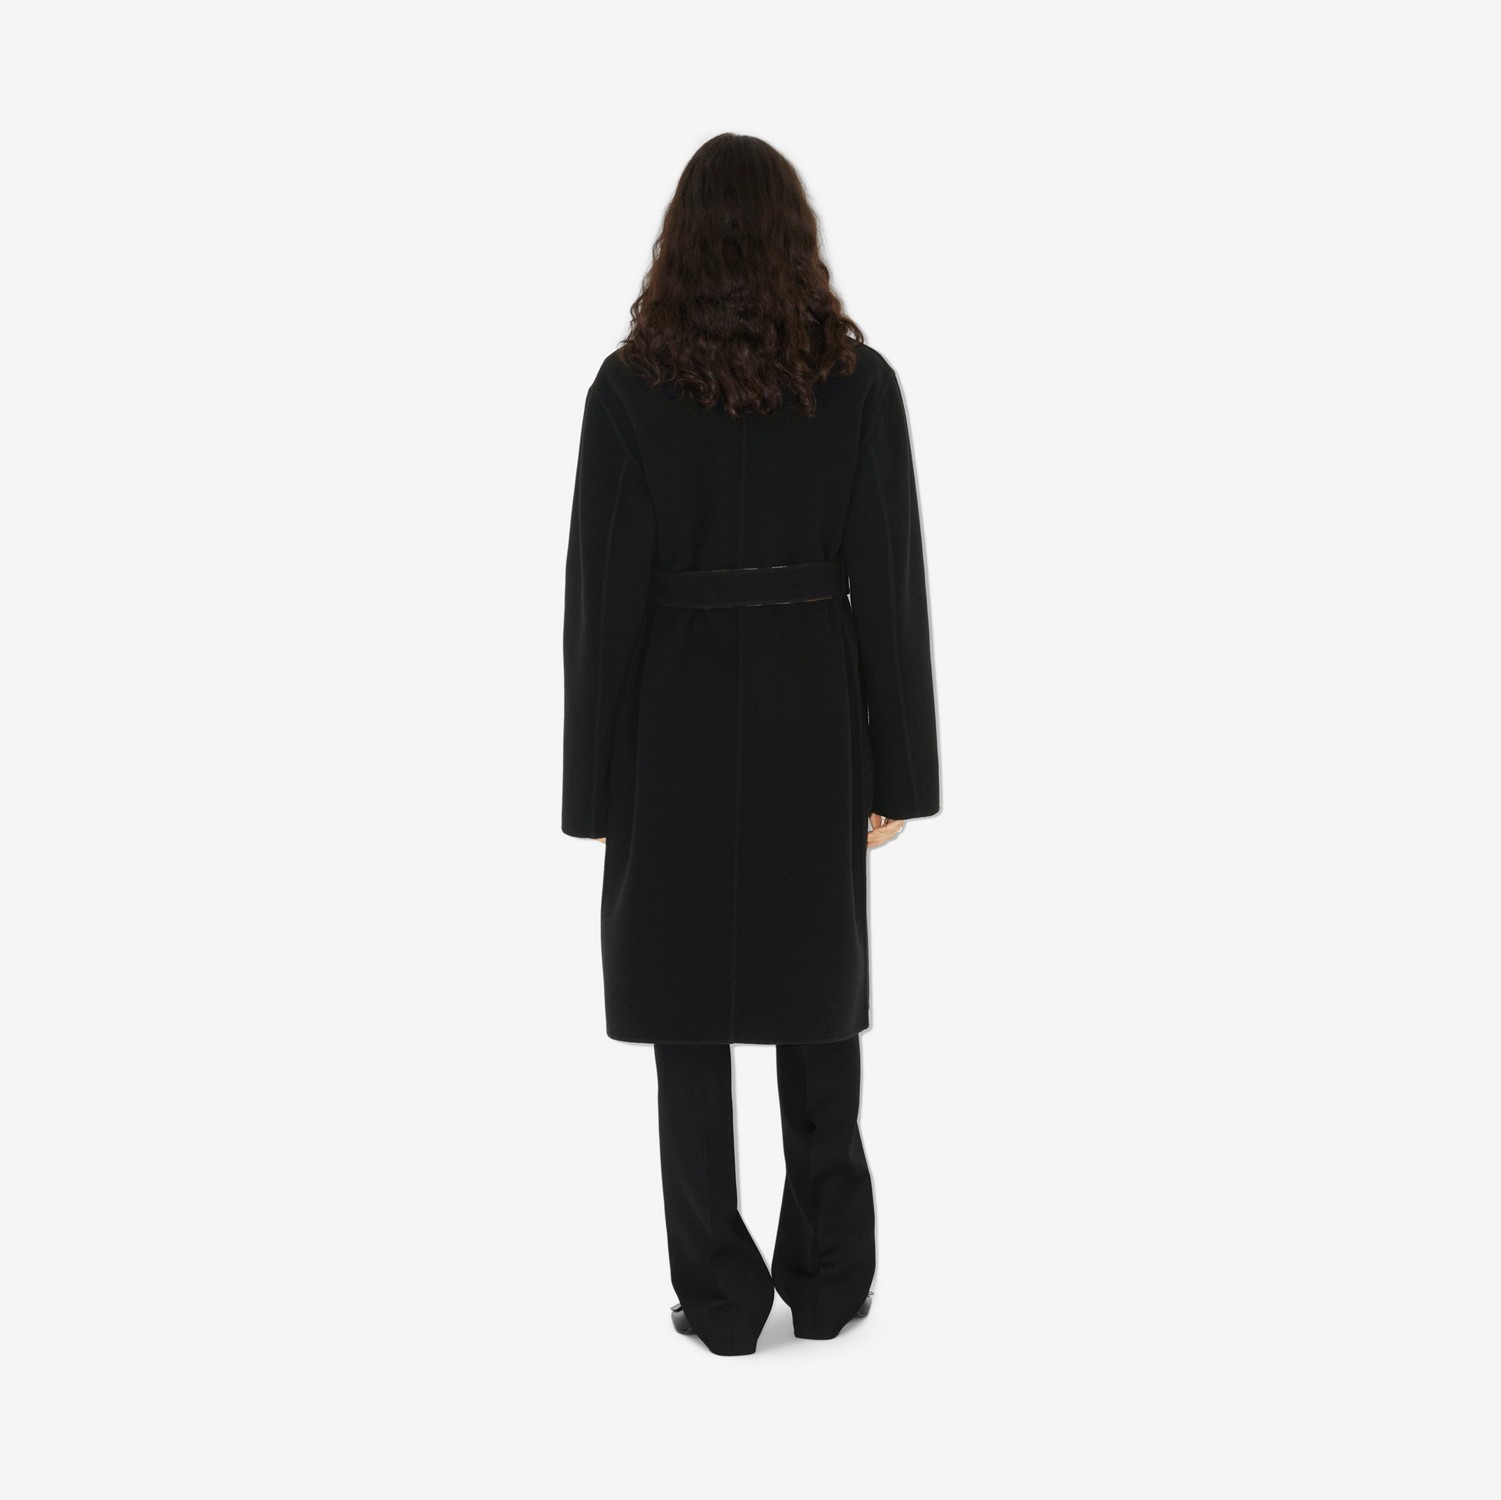 Reversible Check Wool Coat in Birch Brown - Women | Burberry® Official